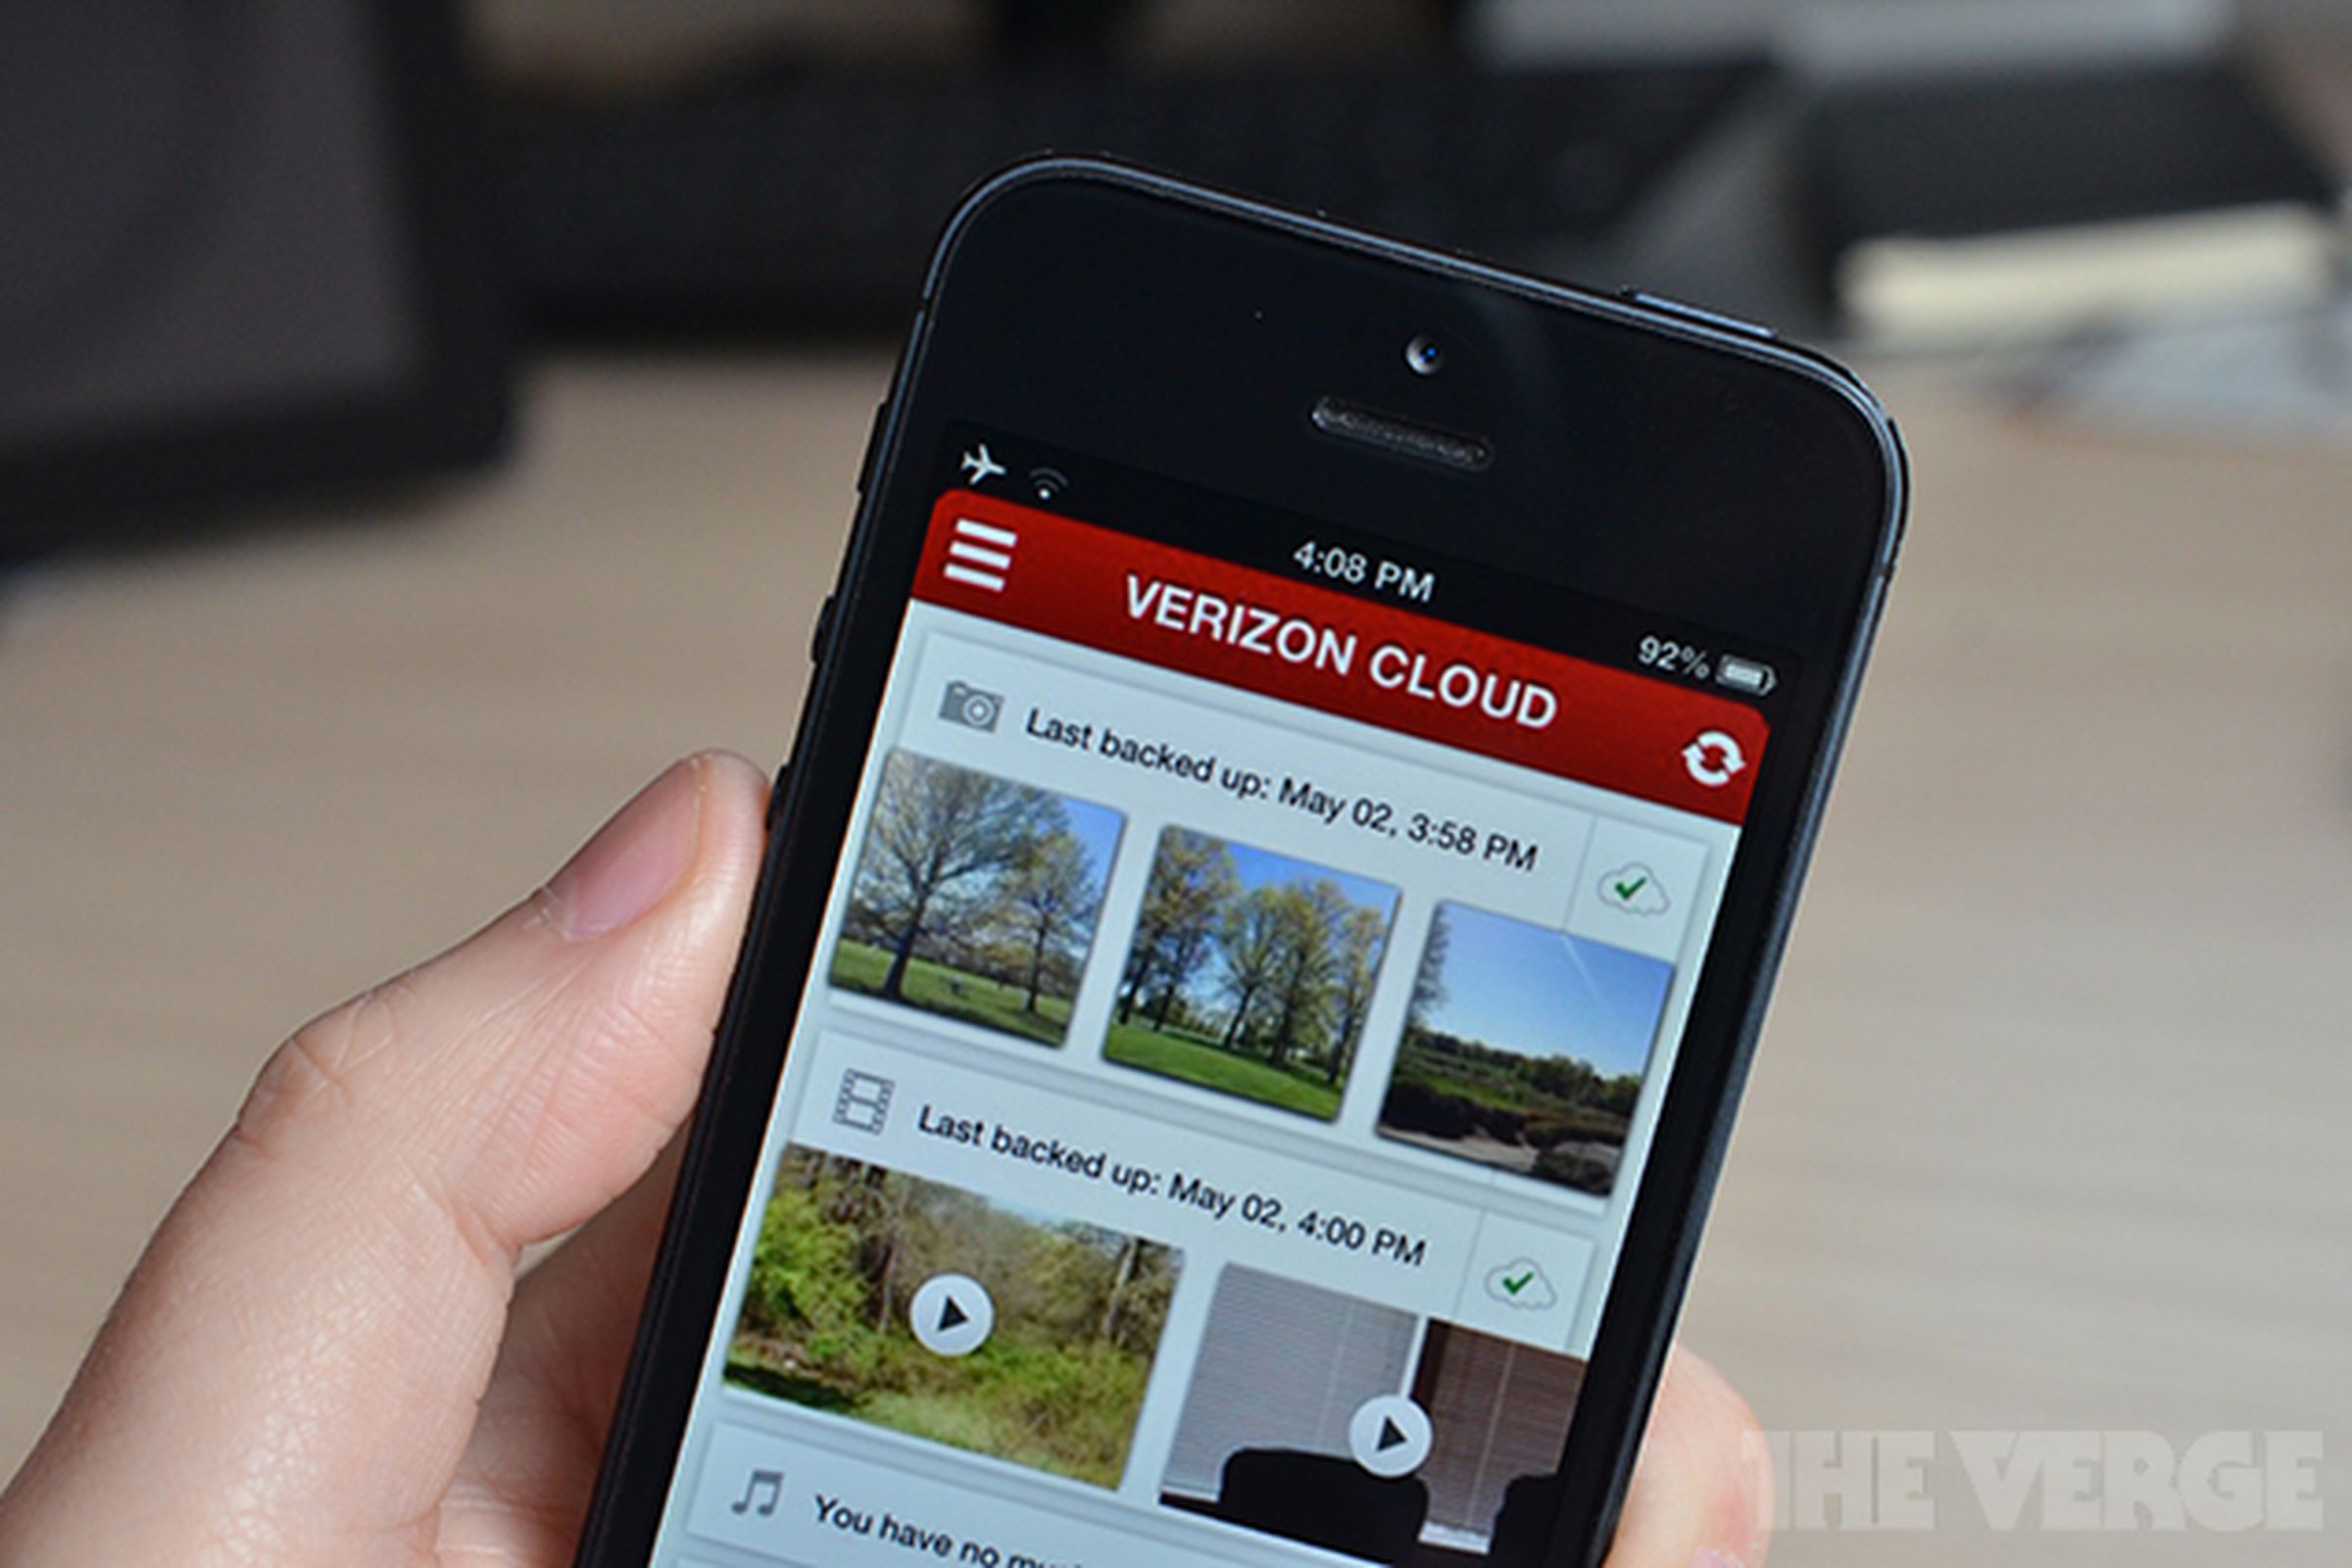 Verizon Cloud iOS app